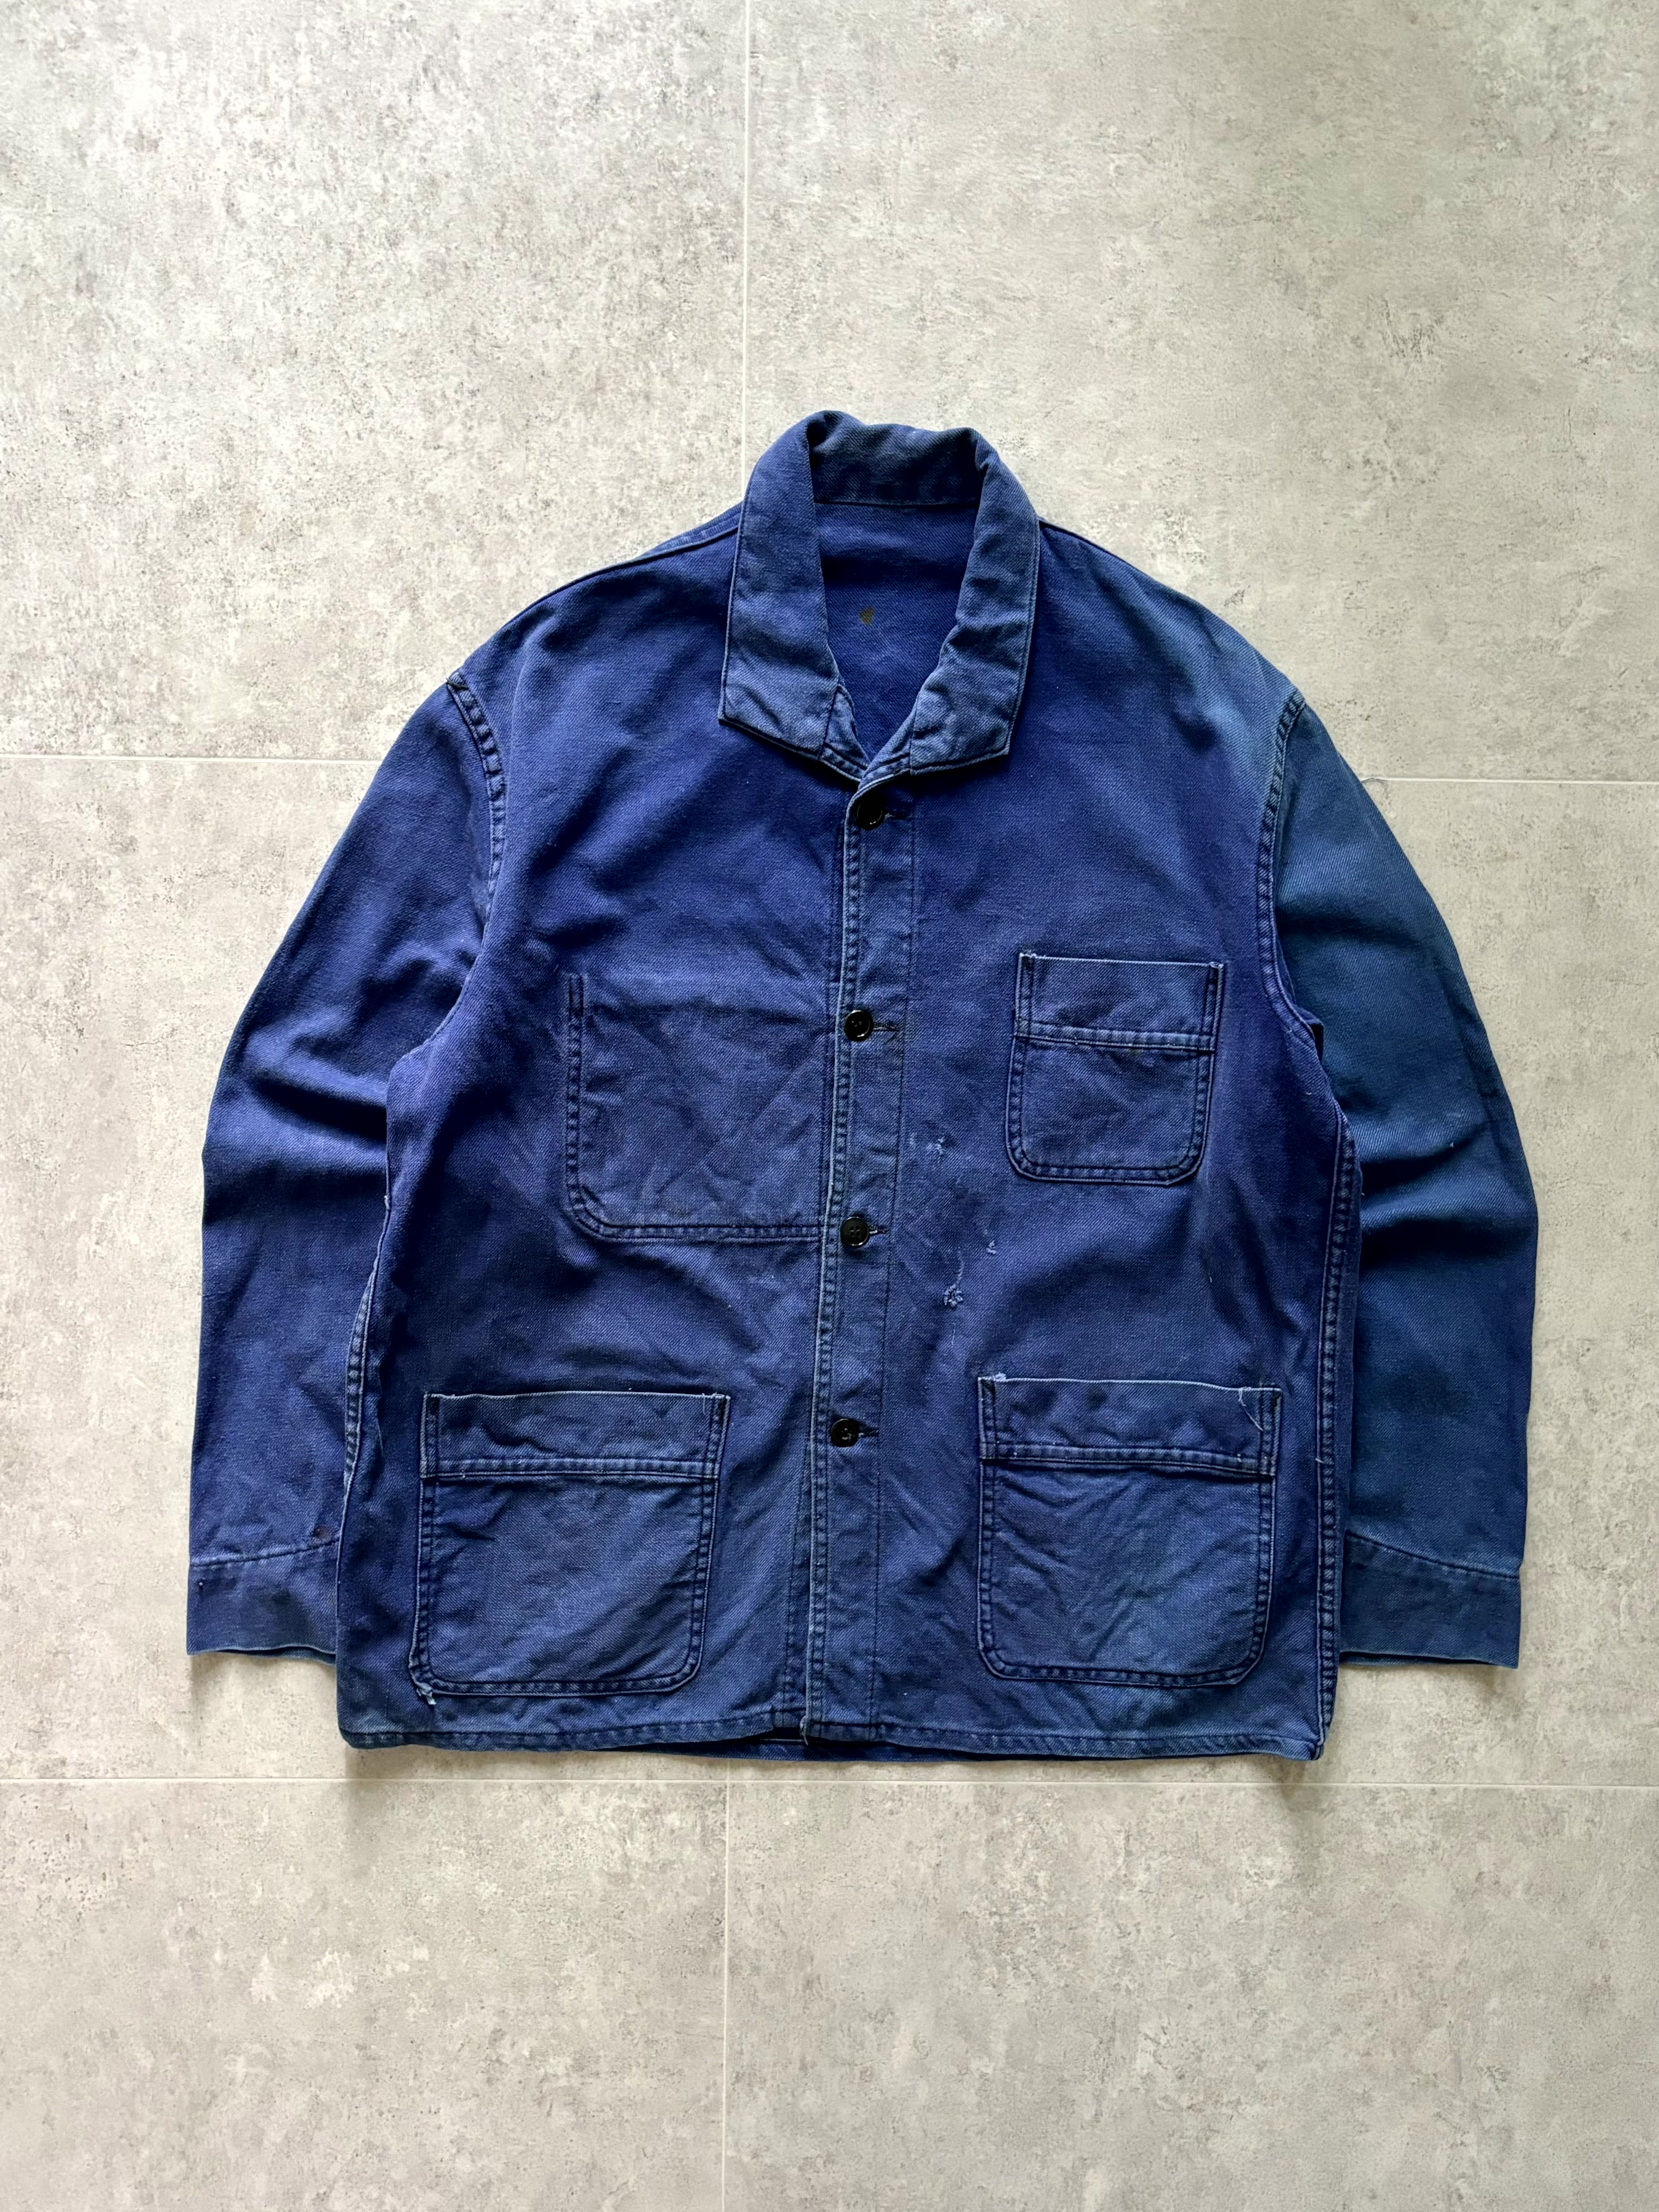 VTG French Work Jacket ~105 Size - 체리피커